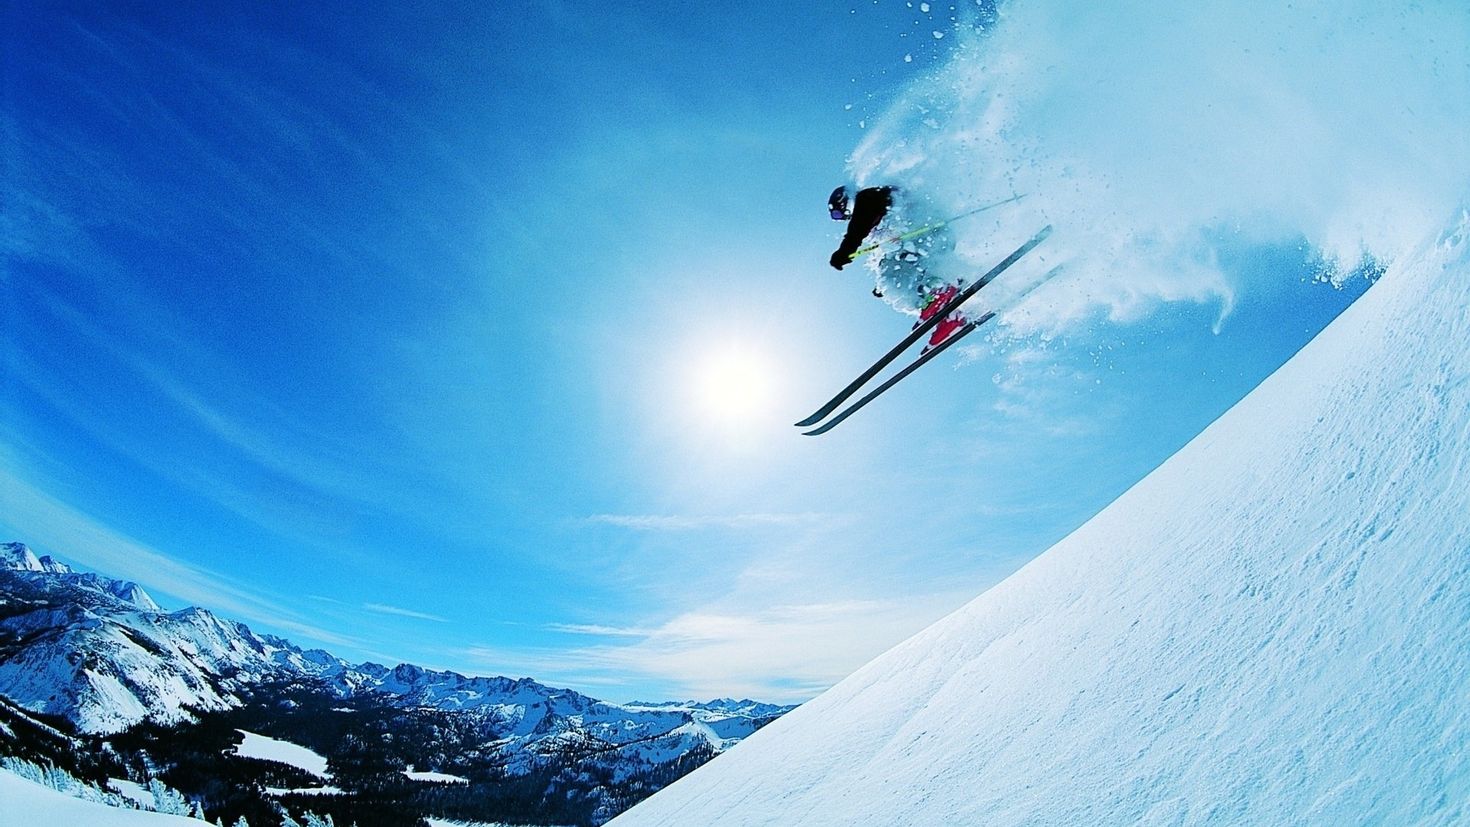 Skiing pictures. Фристайл-бэккантри. Фристайл фрирайд. Горные лыжи к2 фрирайд. Фрирайд лыжи фристайл лыжи.